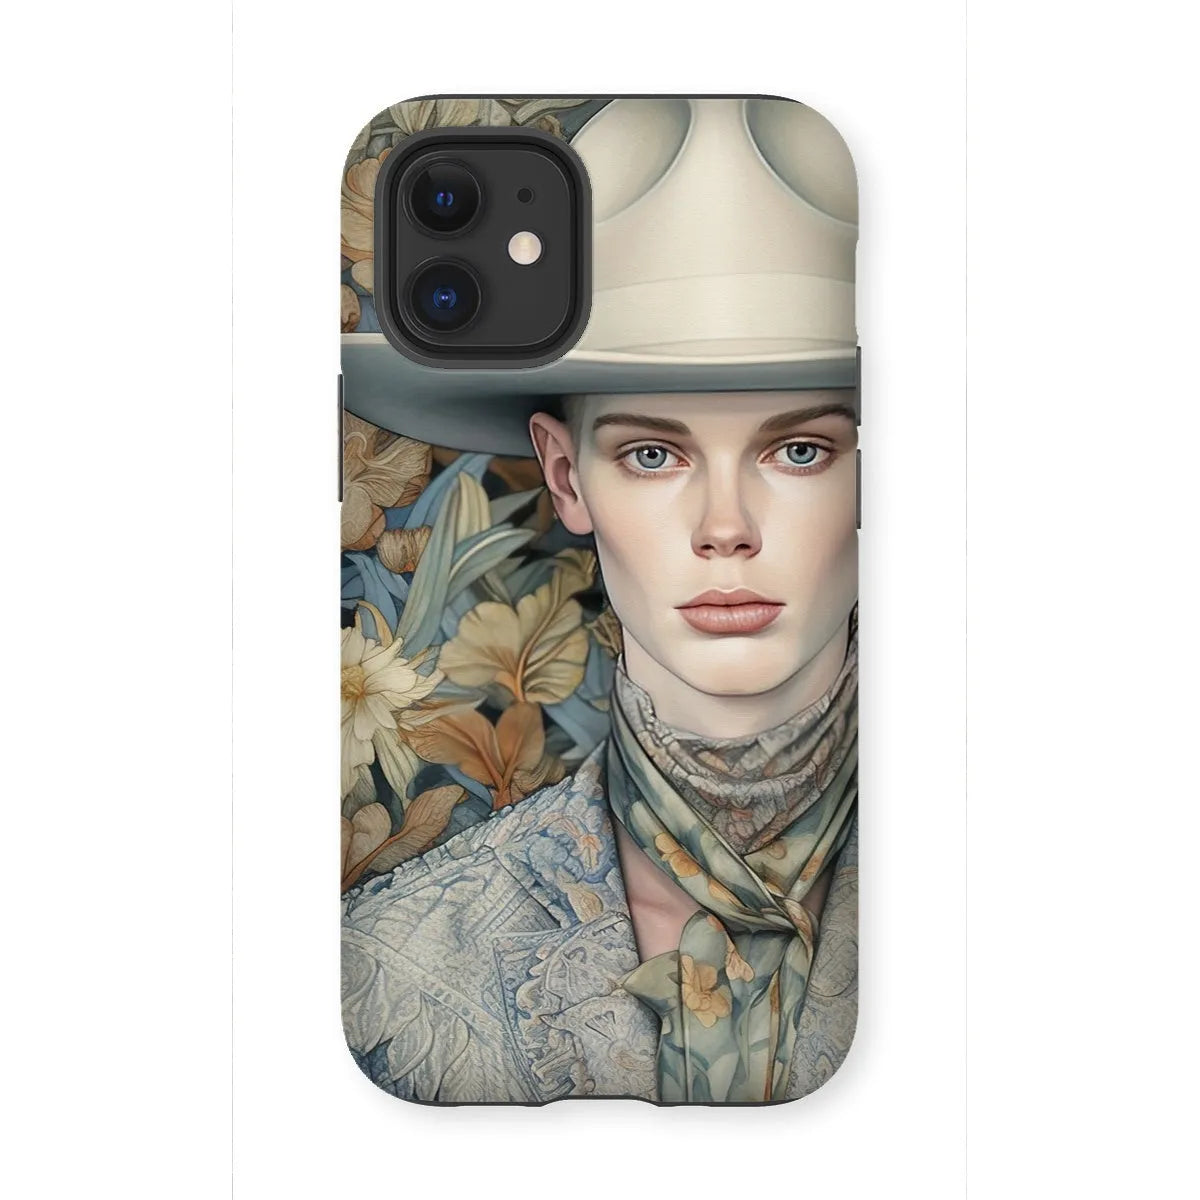 Jasper The Gay Cowboy - Dandy Gay Aesthetic Art Phone Case - Iphone 12 Mini / Matte - Mobile Phone Cases - Aesthetic Art